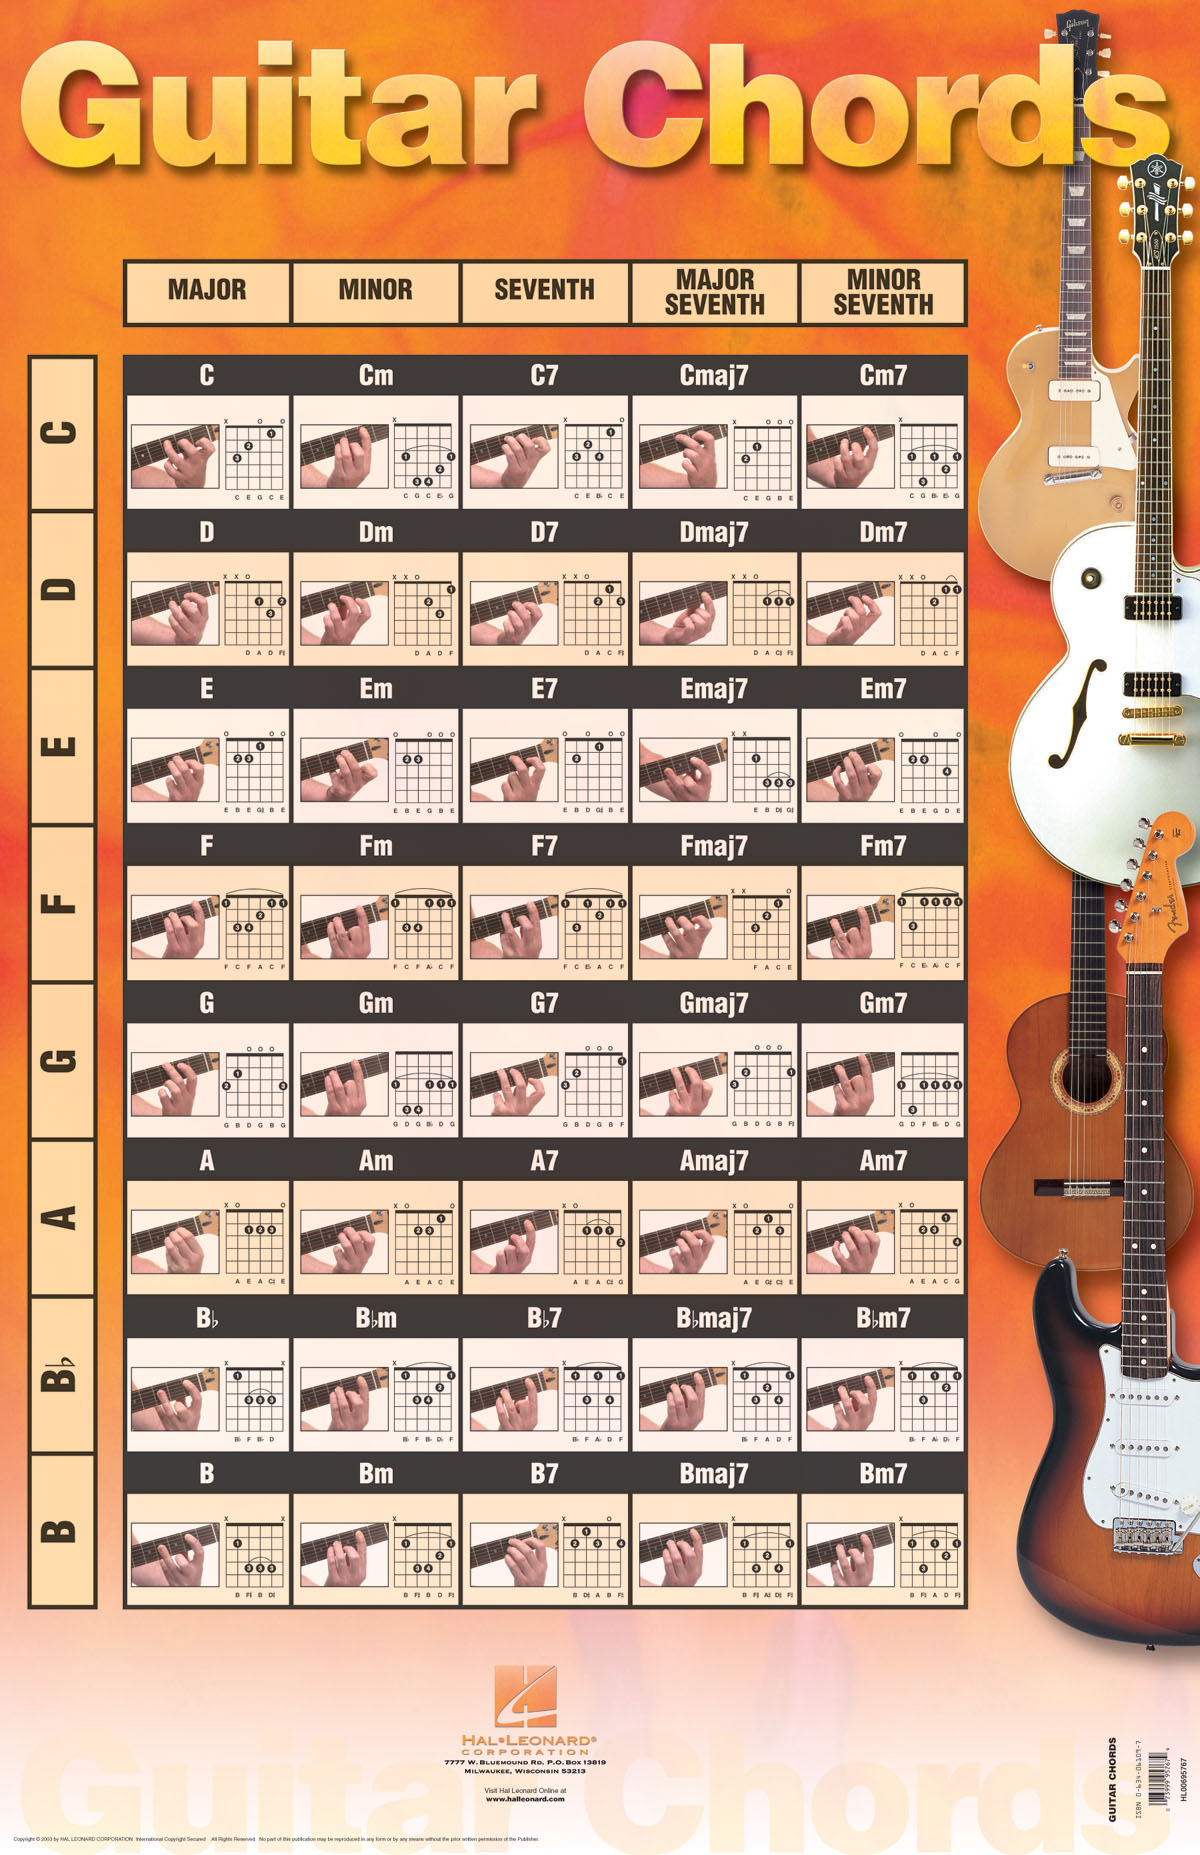 Guitar Chords Poster: Instrumental Reference